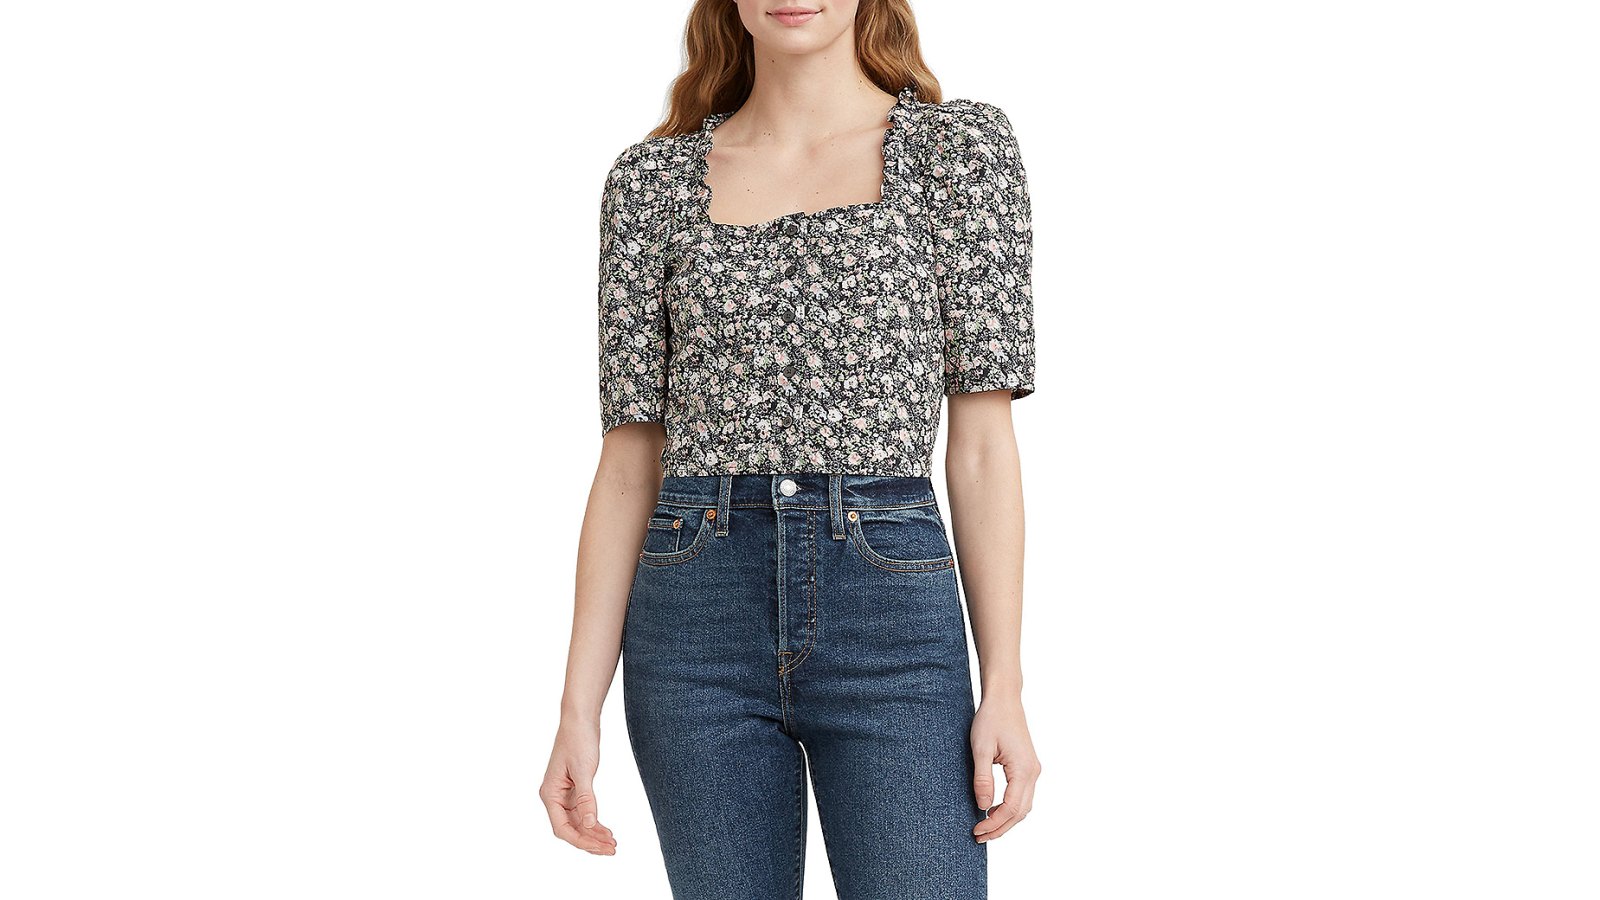 https://www.usmagazine.com/wp-content/uploads/2022/03/walmart-levis-floral-blouse.jpg?w=1600&h=900&crop=1&quality=86&strip=all